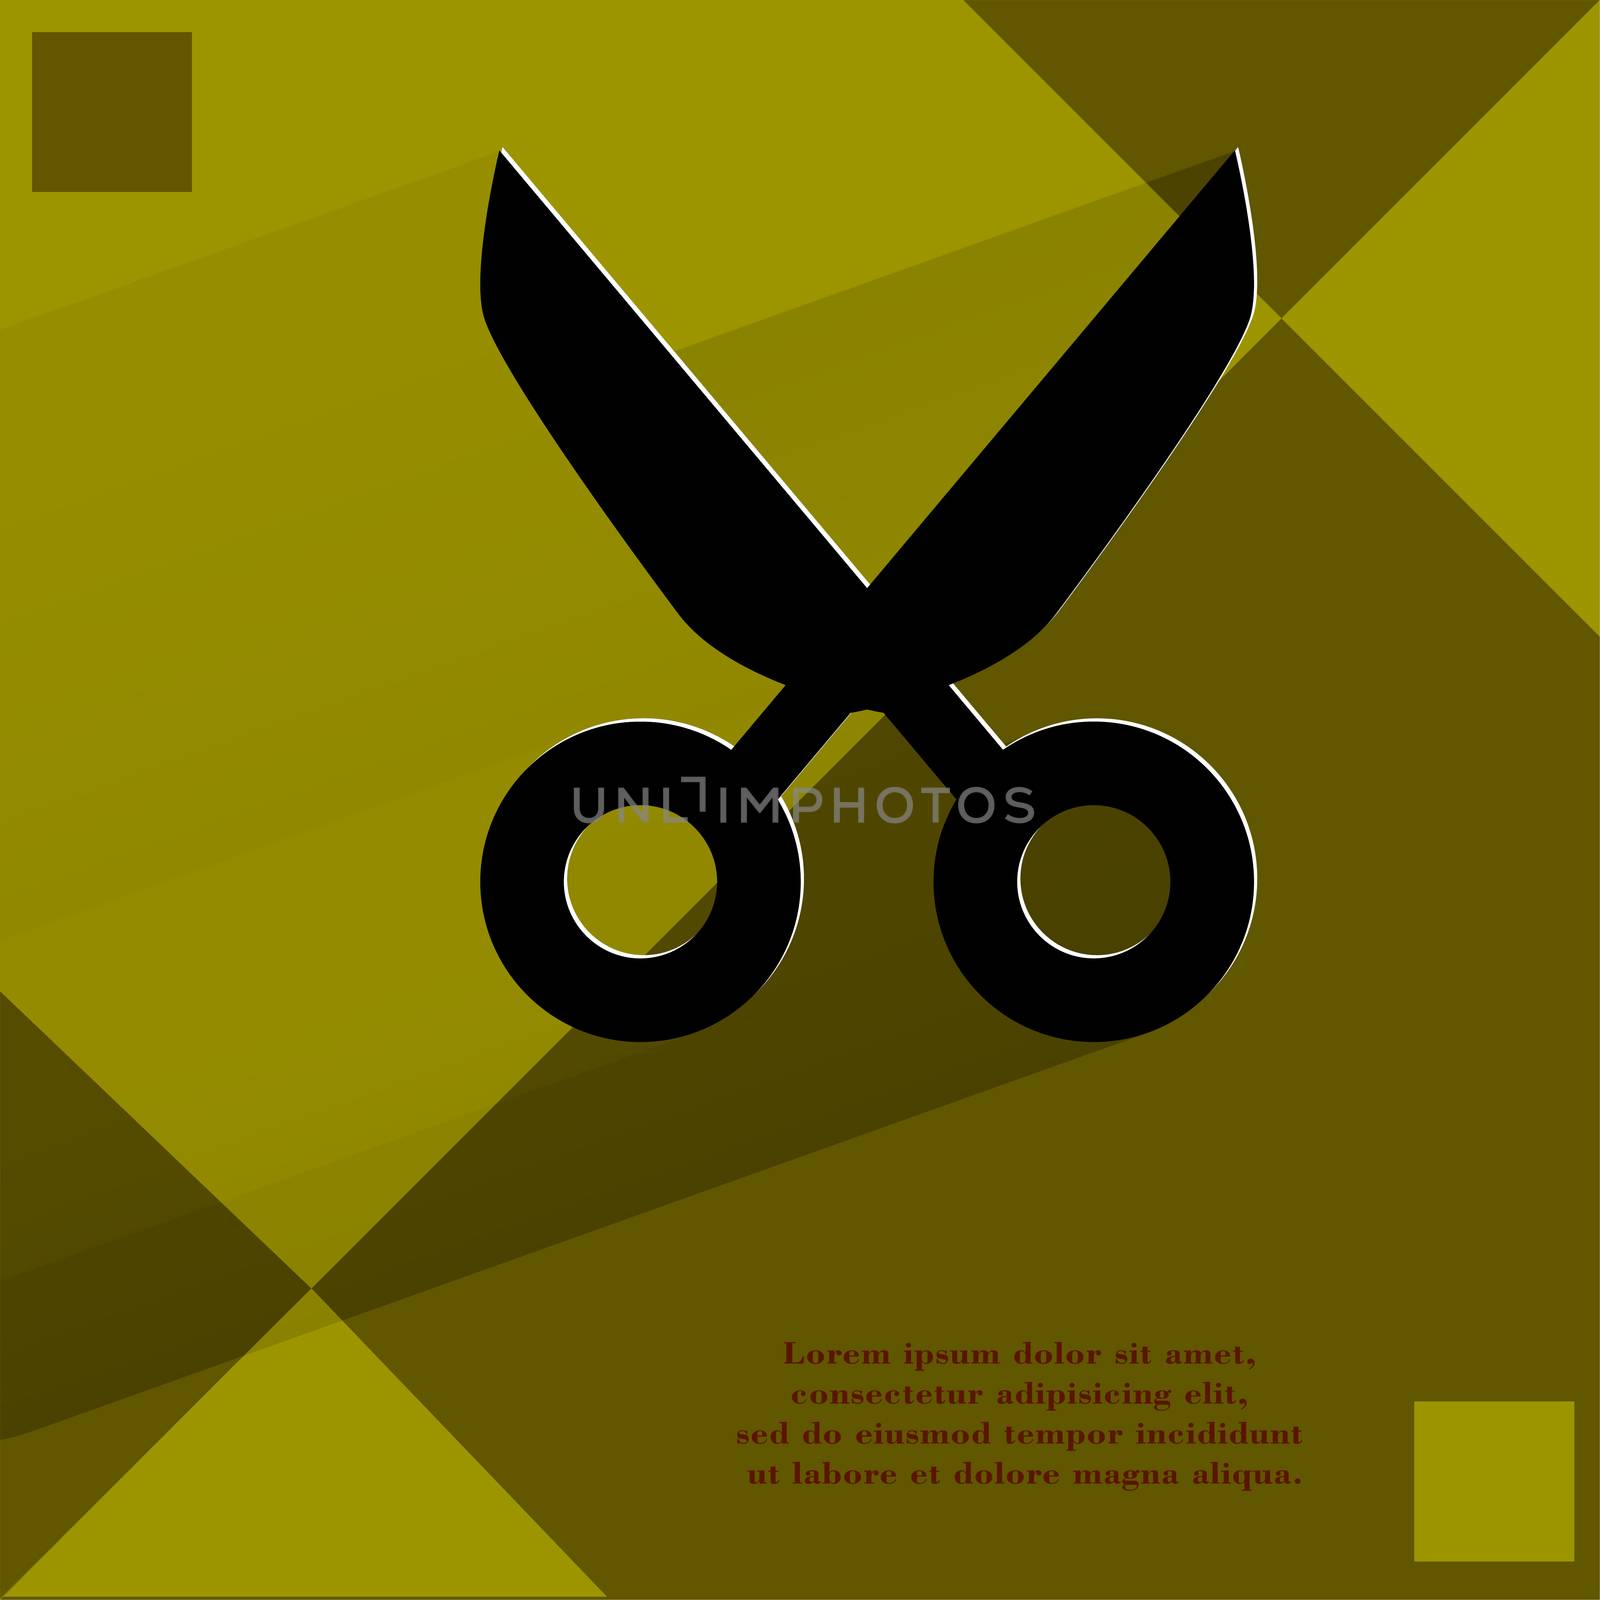 Scissors. Flat modern web design on a flat geometric abstract background . 